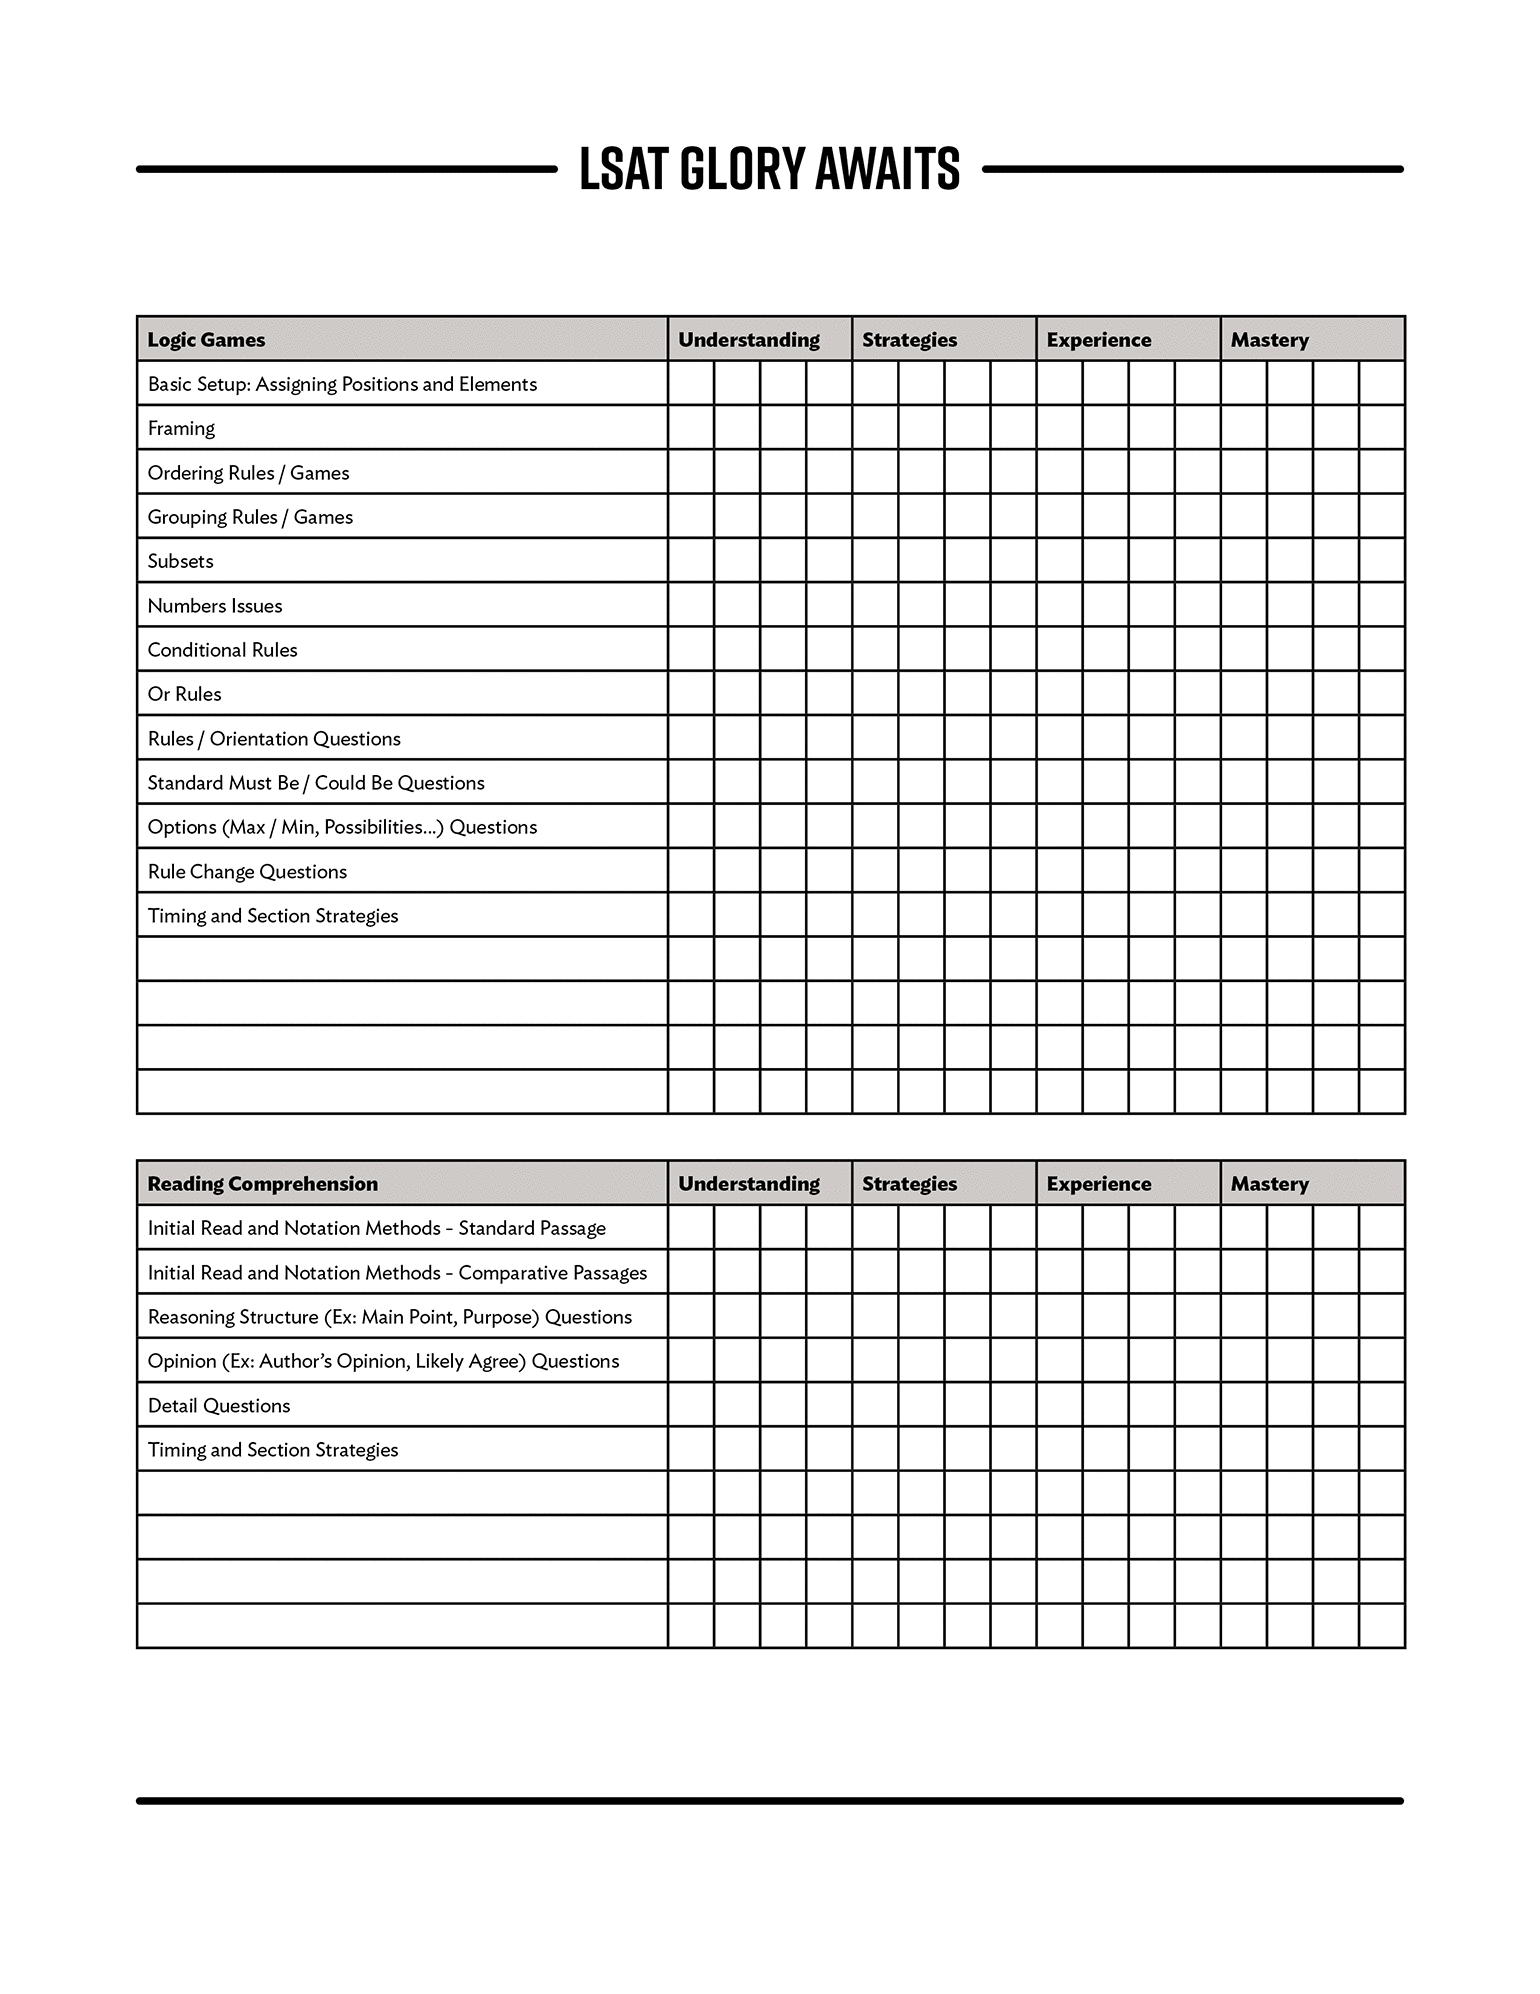 LSAT Readiness Checklist